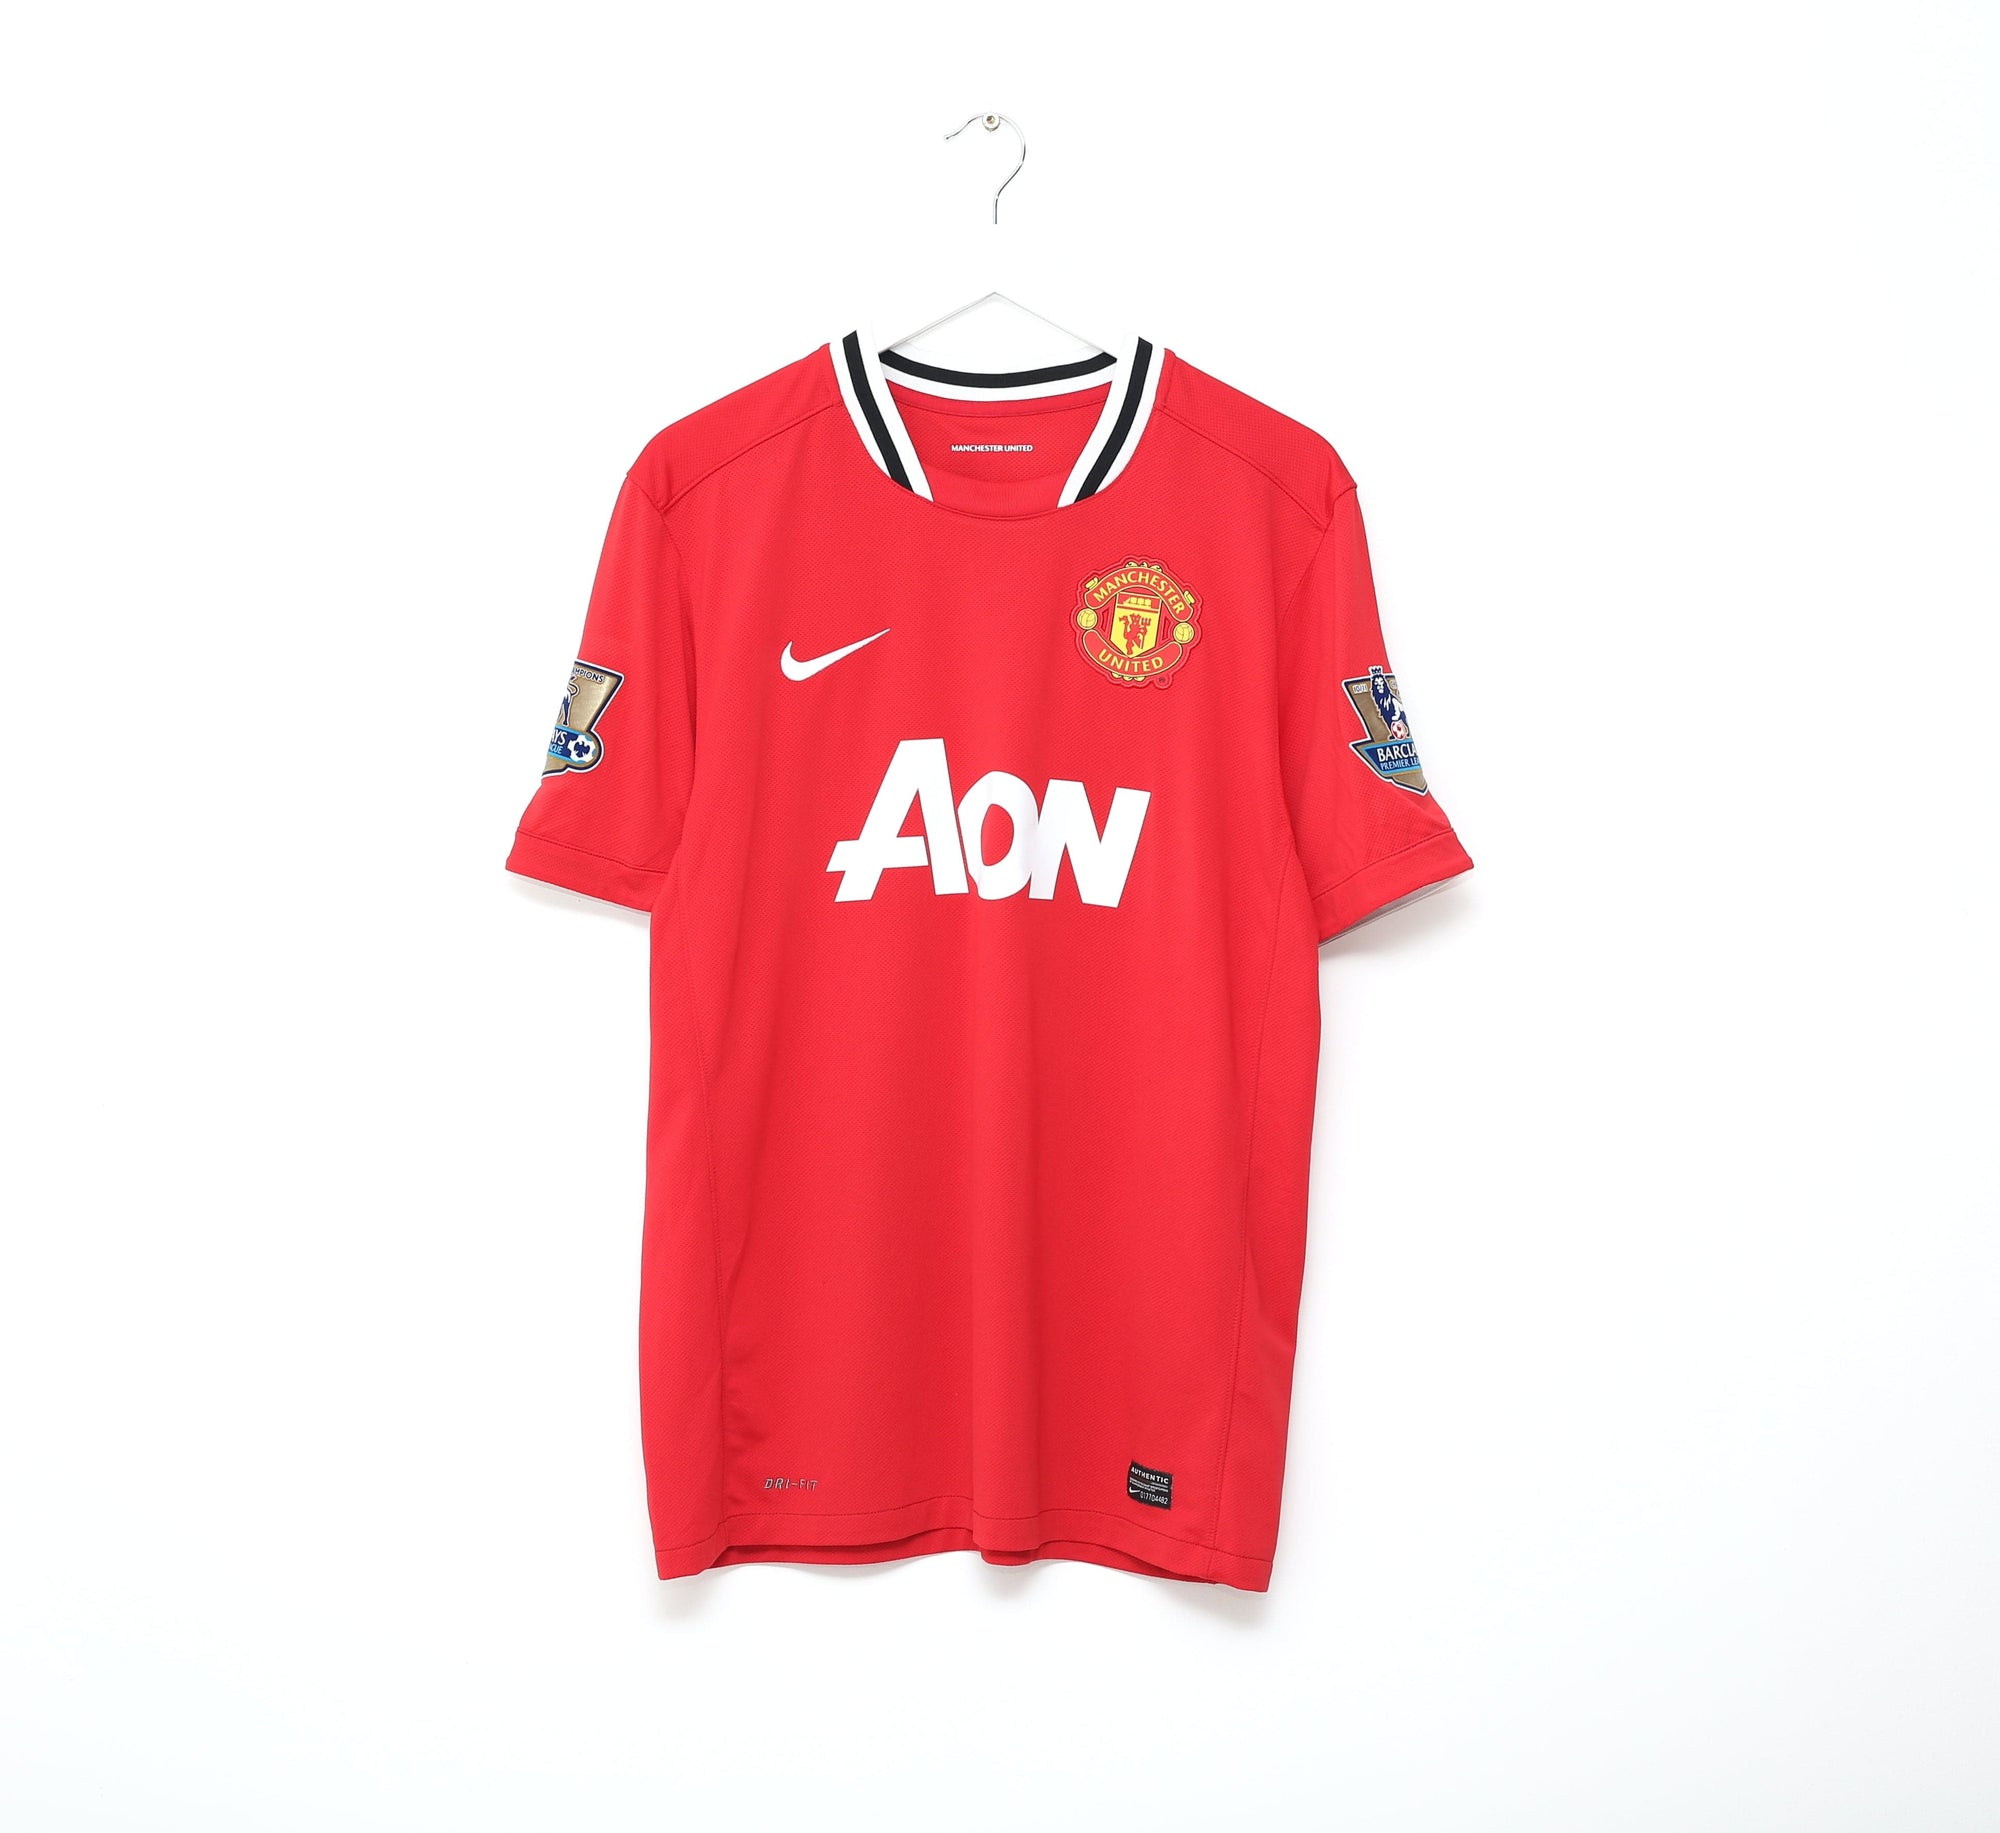 2011/12 MORRISON #49 Manchester United Vintage Nike Home Football Shirt (M/L)